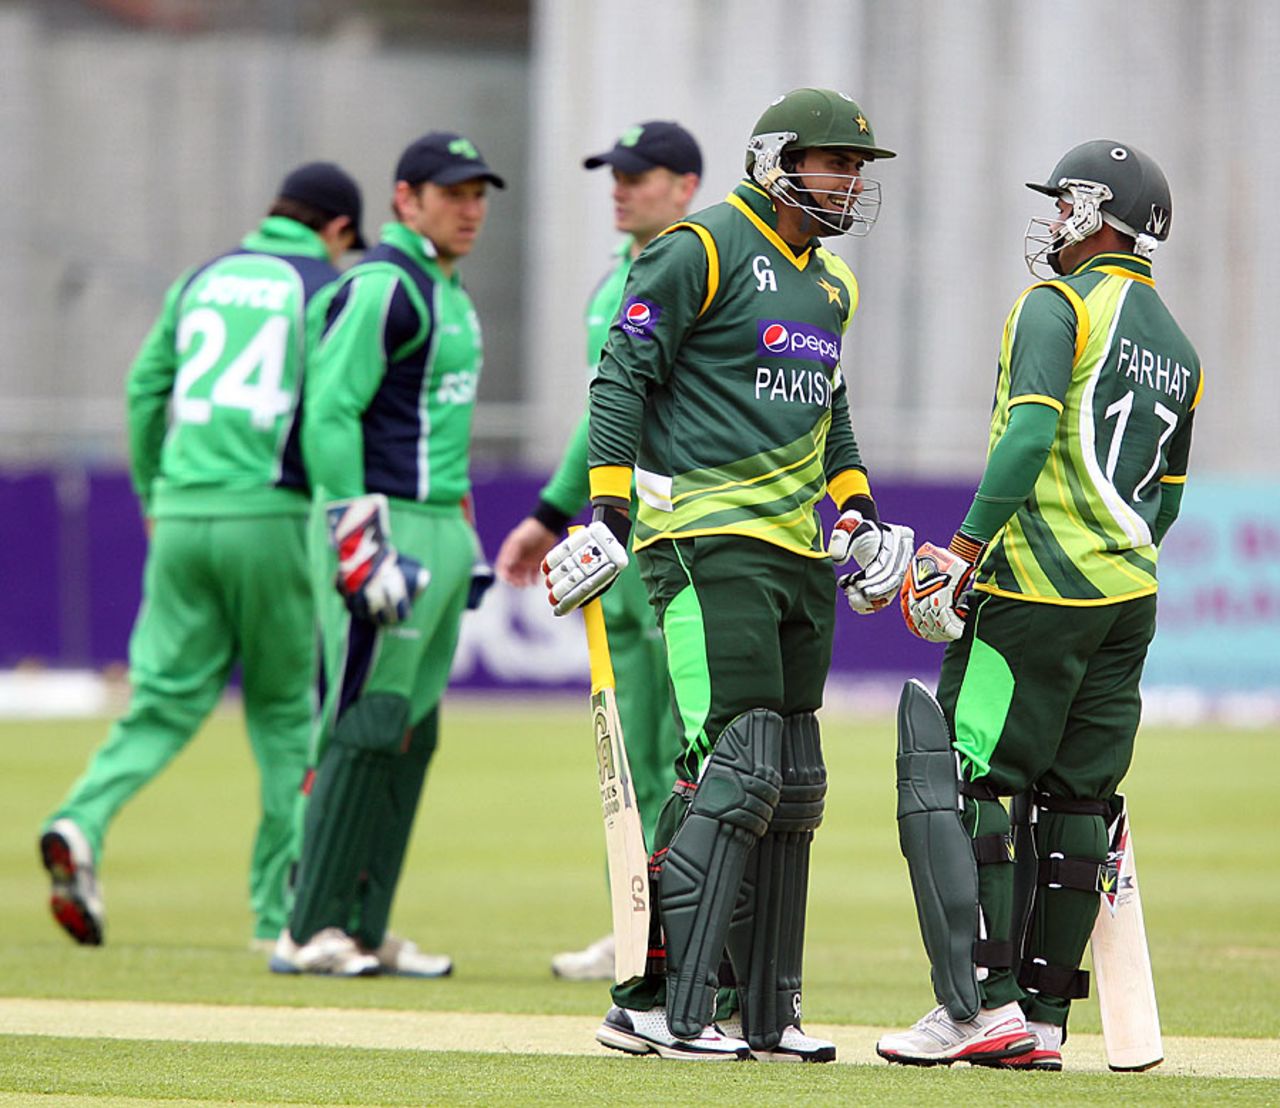 Openers Nasir Jamshed and Imran Farhat added 27 runs before Jamshed retired hurt, Ireland v Pakistan, 1st ODI, Dublin, May 23, 2013